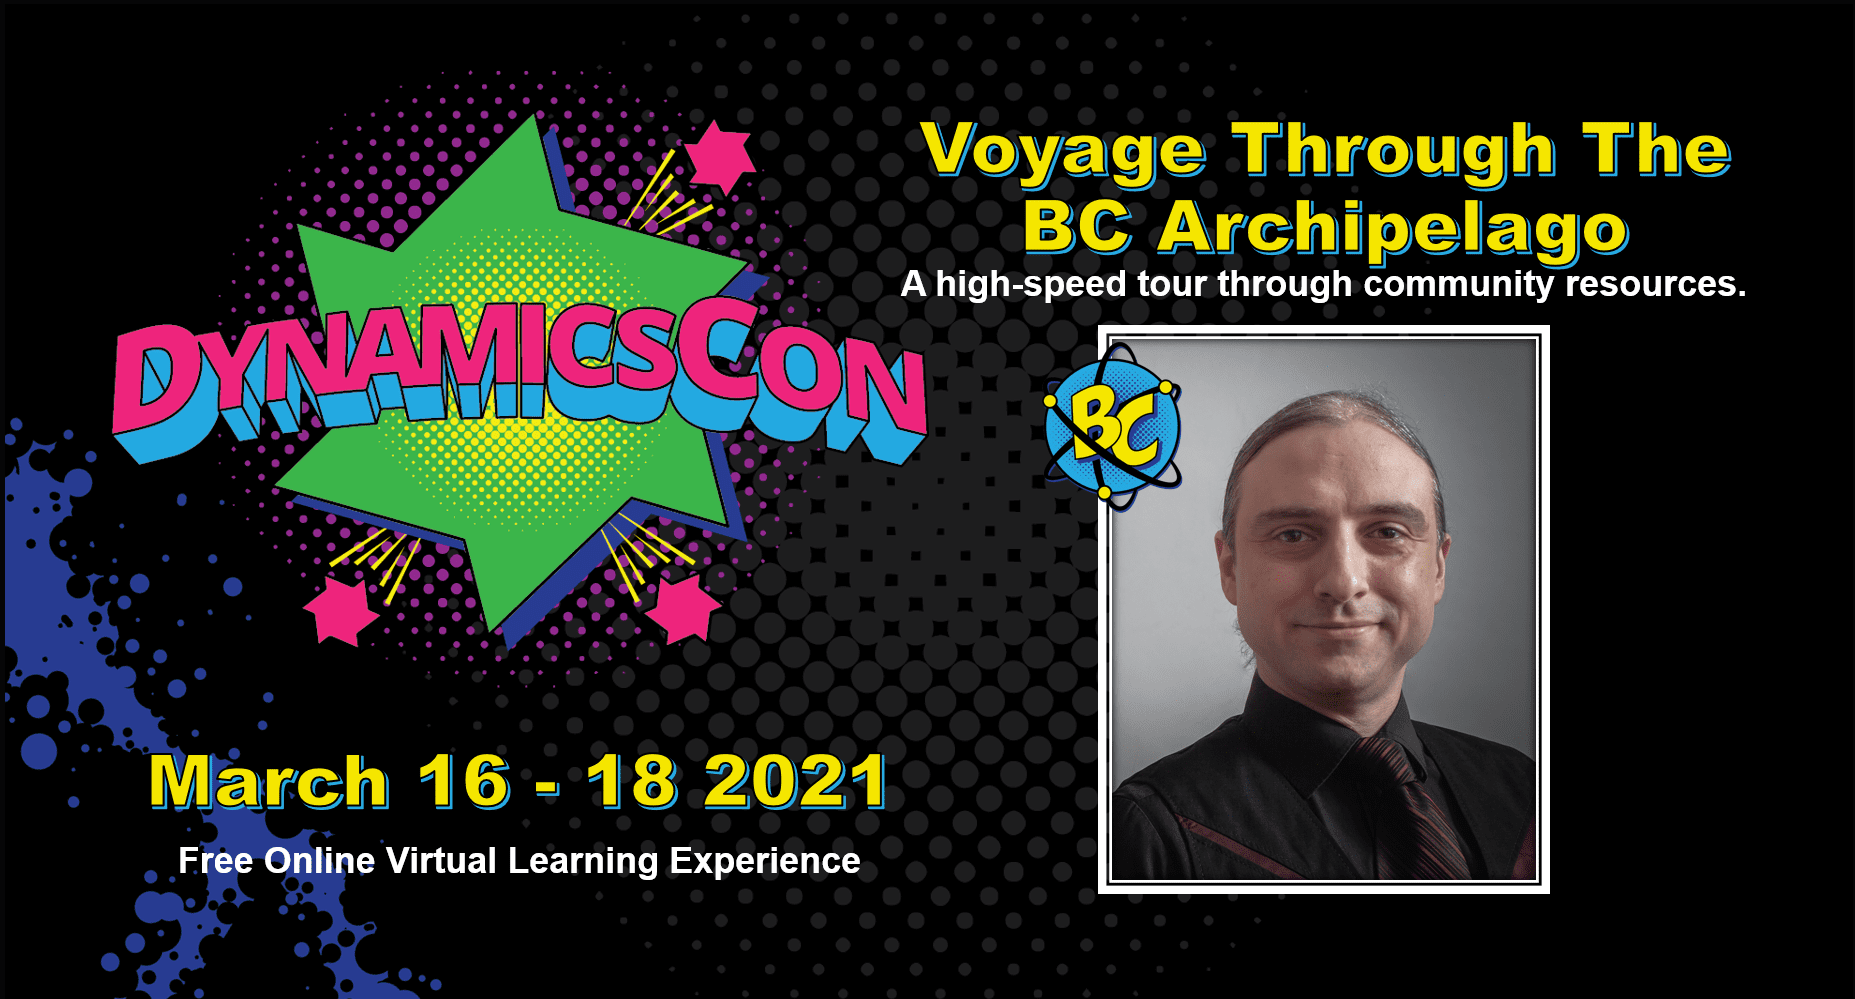 DynamicsCon - Voyage through the BC Archipelago promotional slide